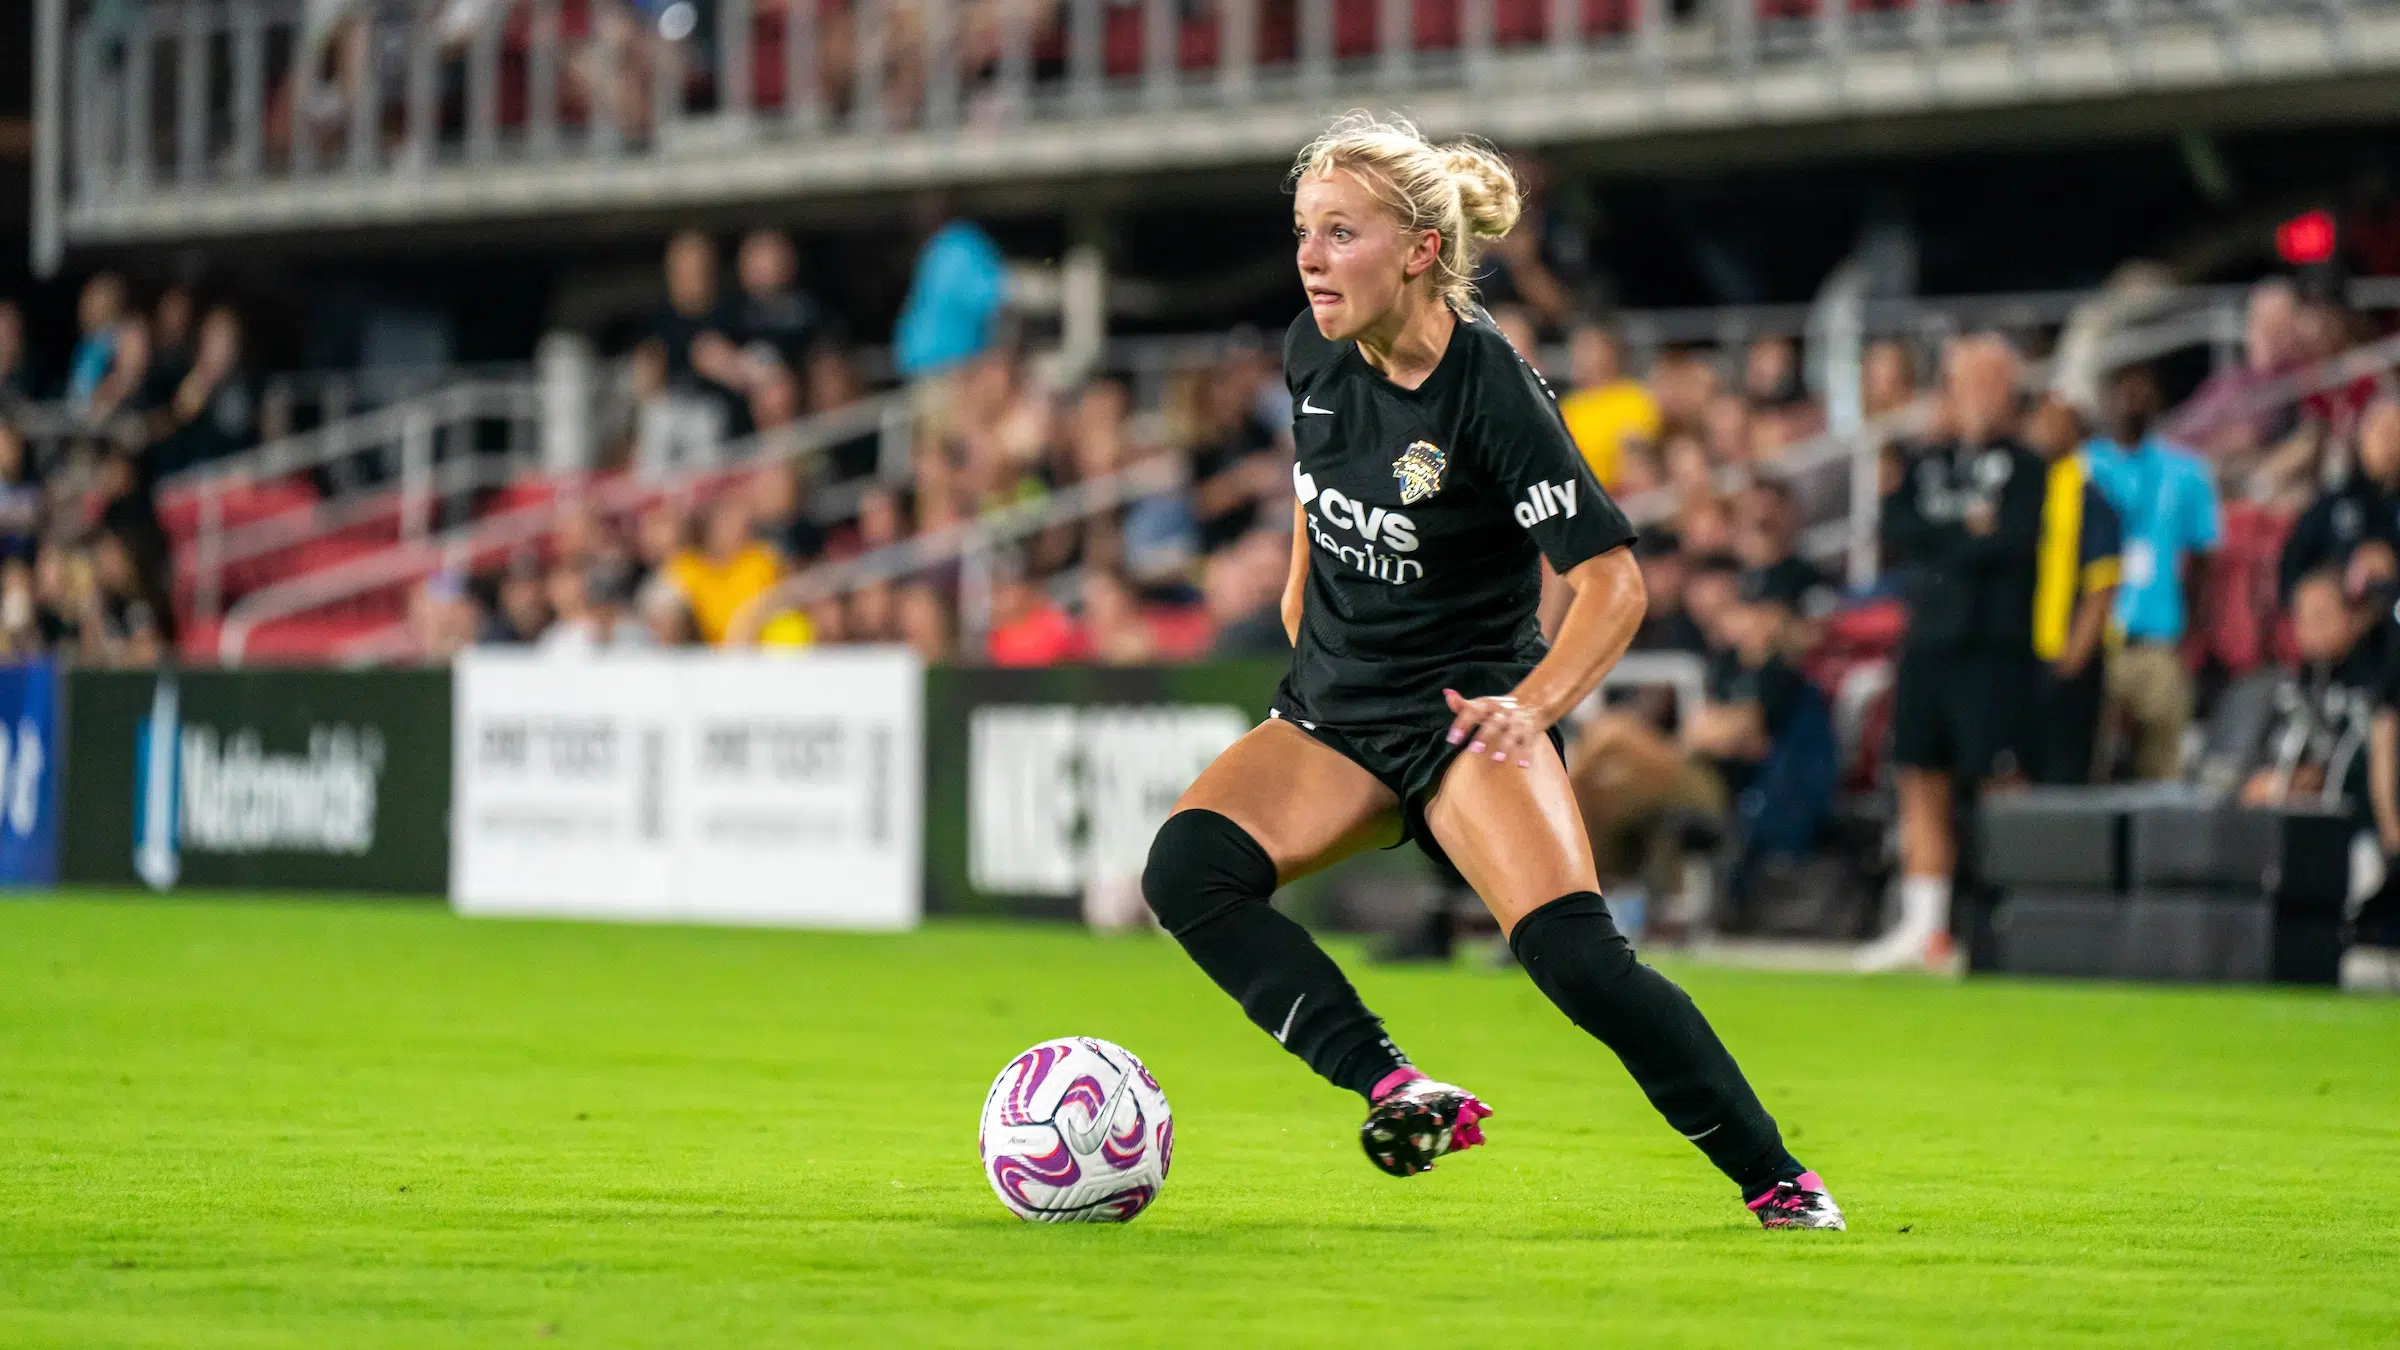 Chloe Ricketts in an all-black uniform dribbles a soccer ball.